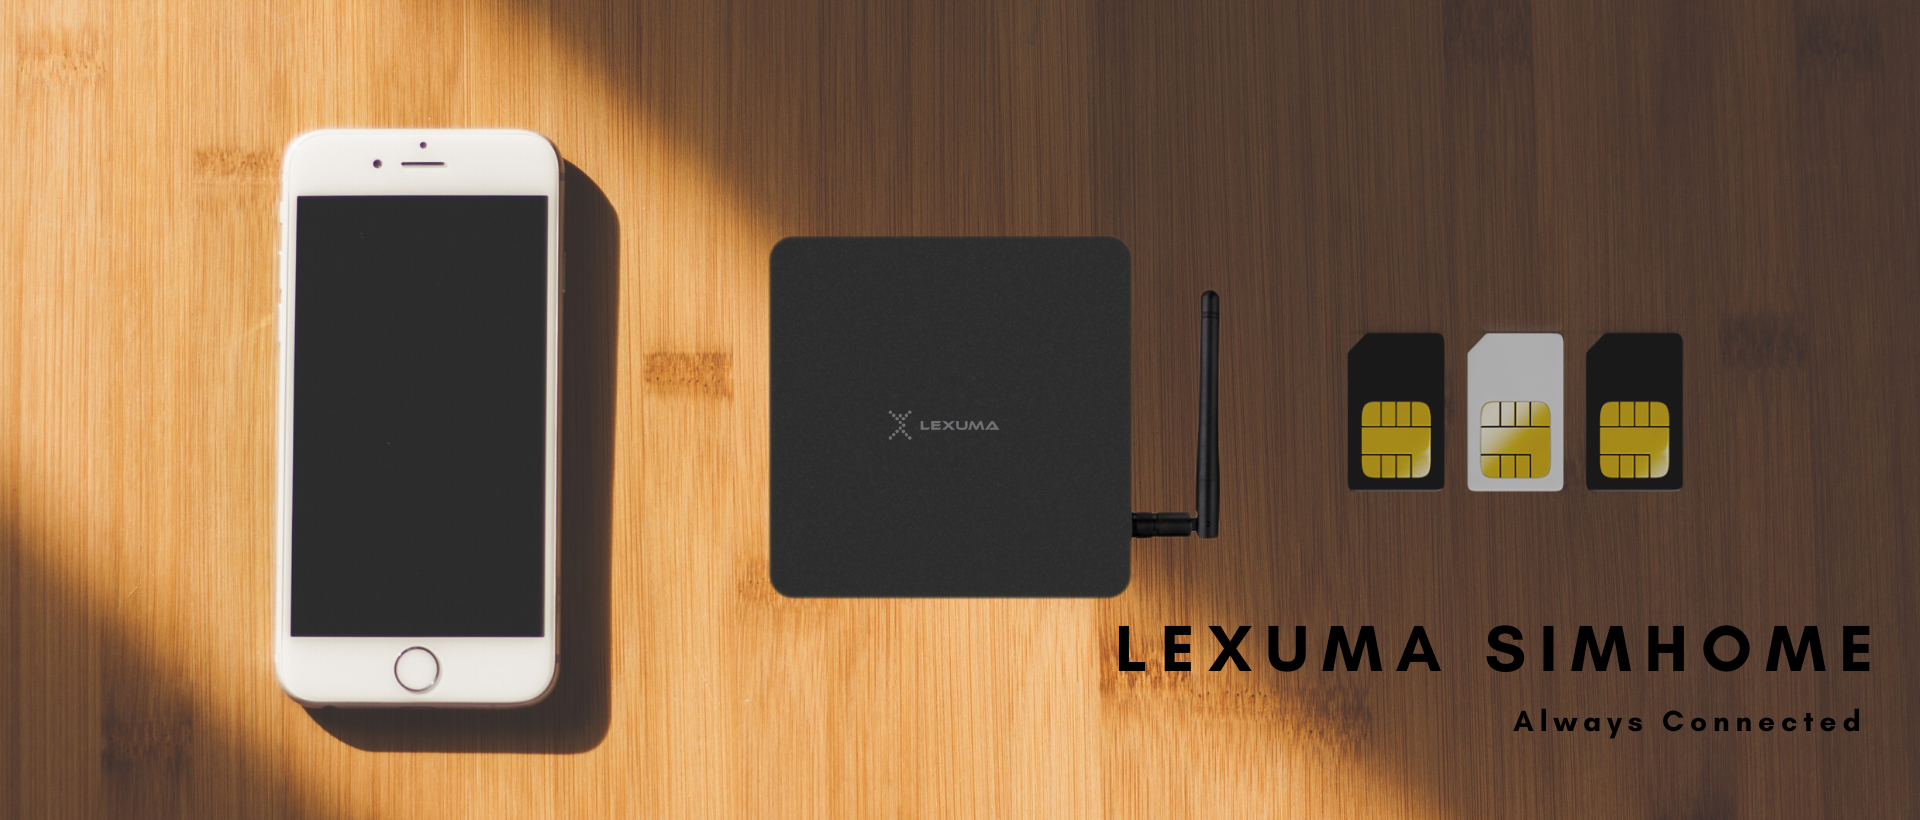 lexuma-simhome-dual-sim-adapter-multi-network-sim-card-homepage